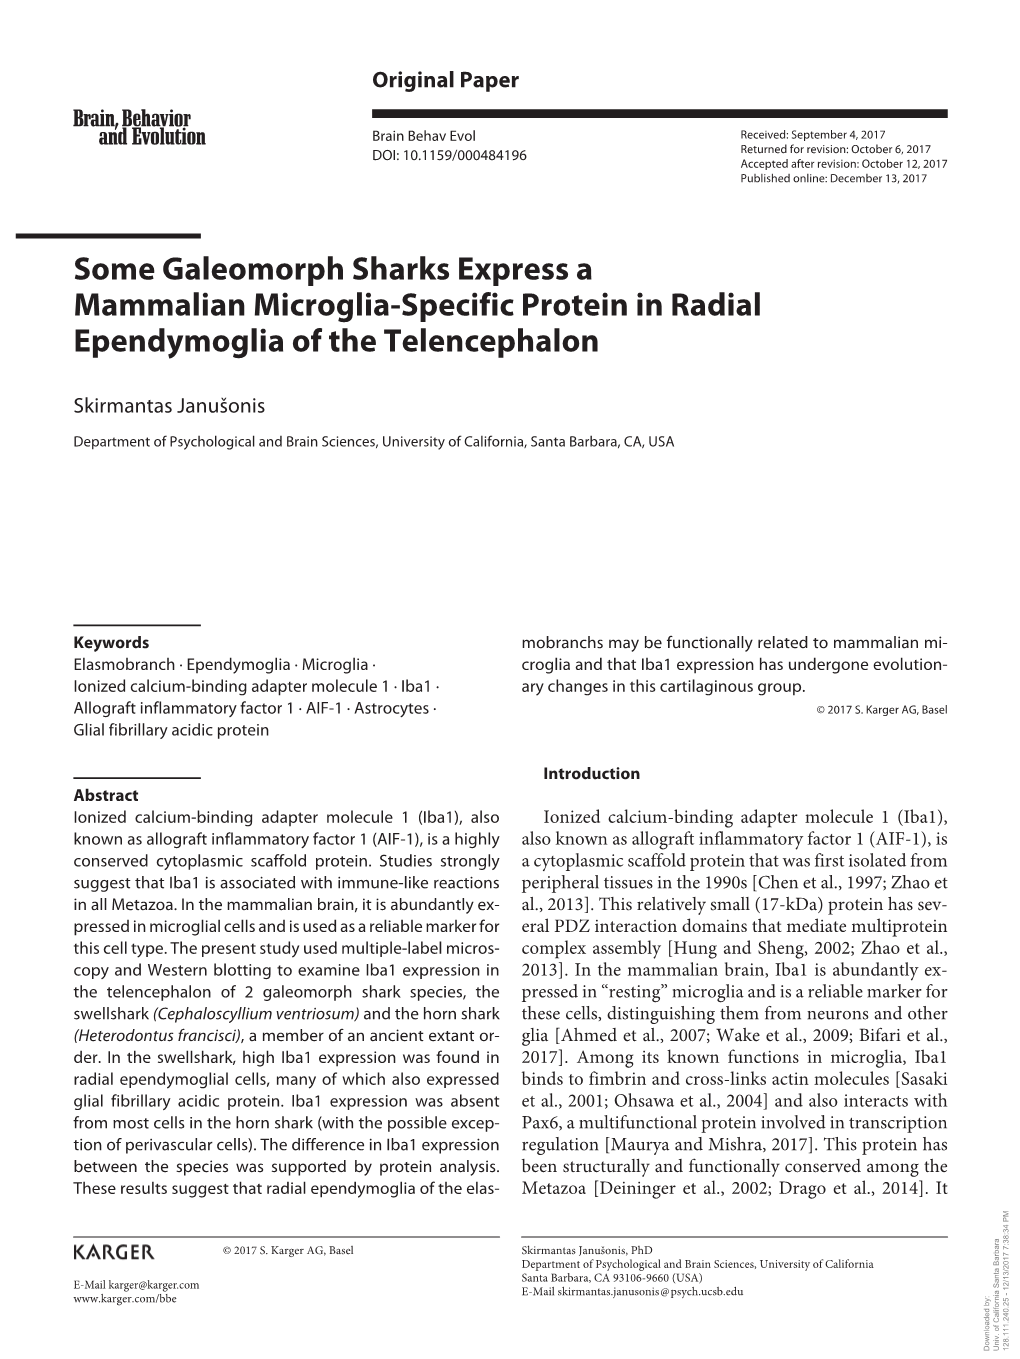 Some Galeomorph Sharks Express a Mammalian Microglia-Specific Protein in Radial Ependymoglia of the Telencephalon